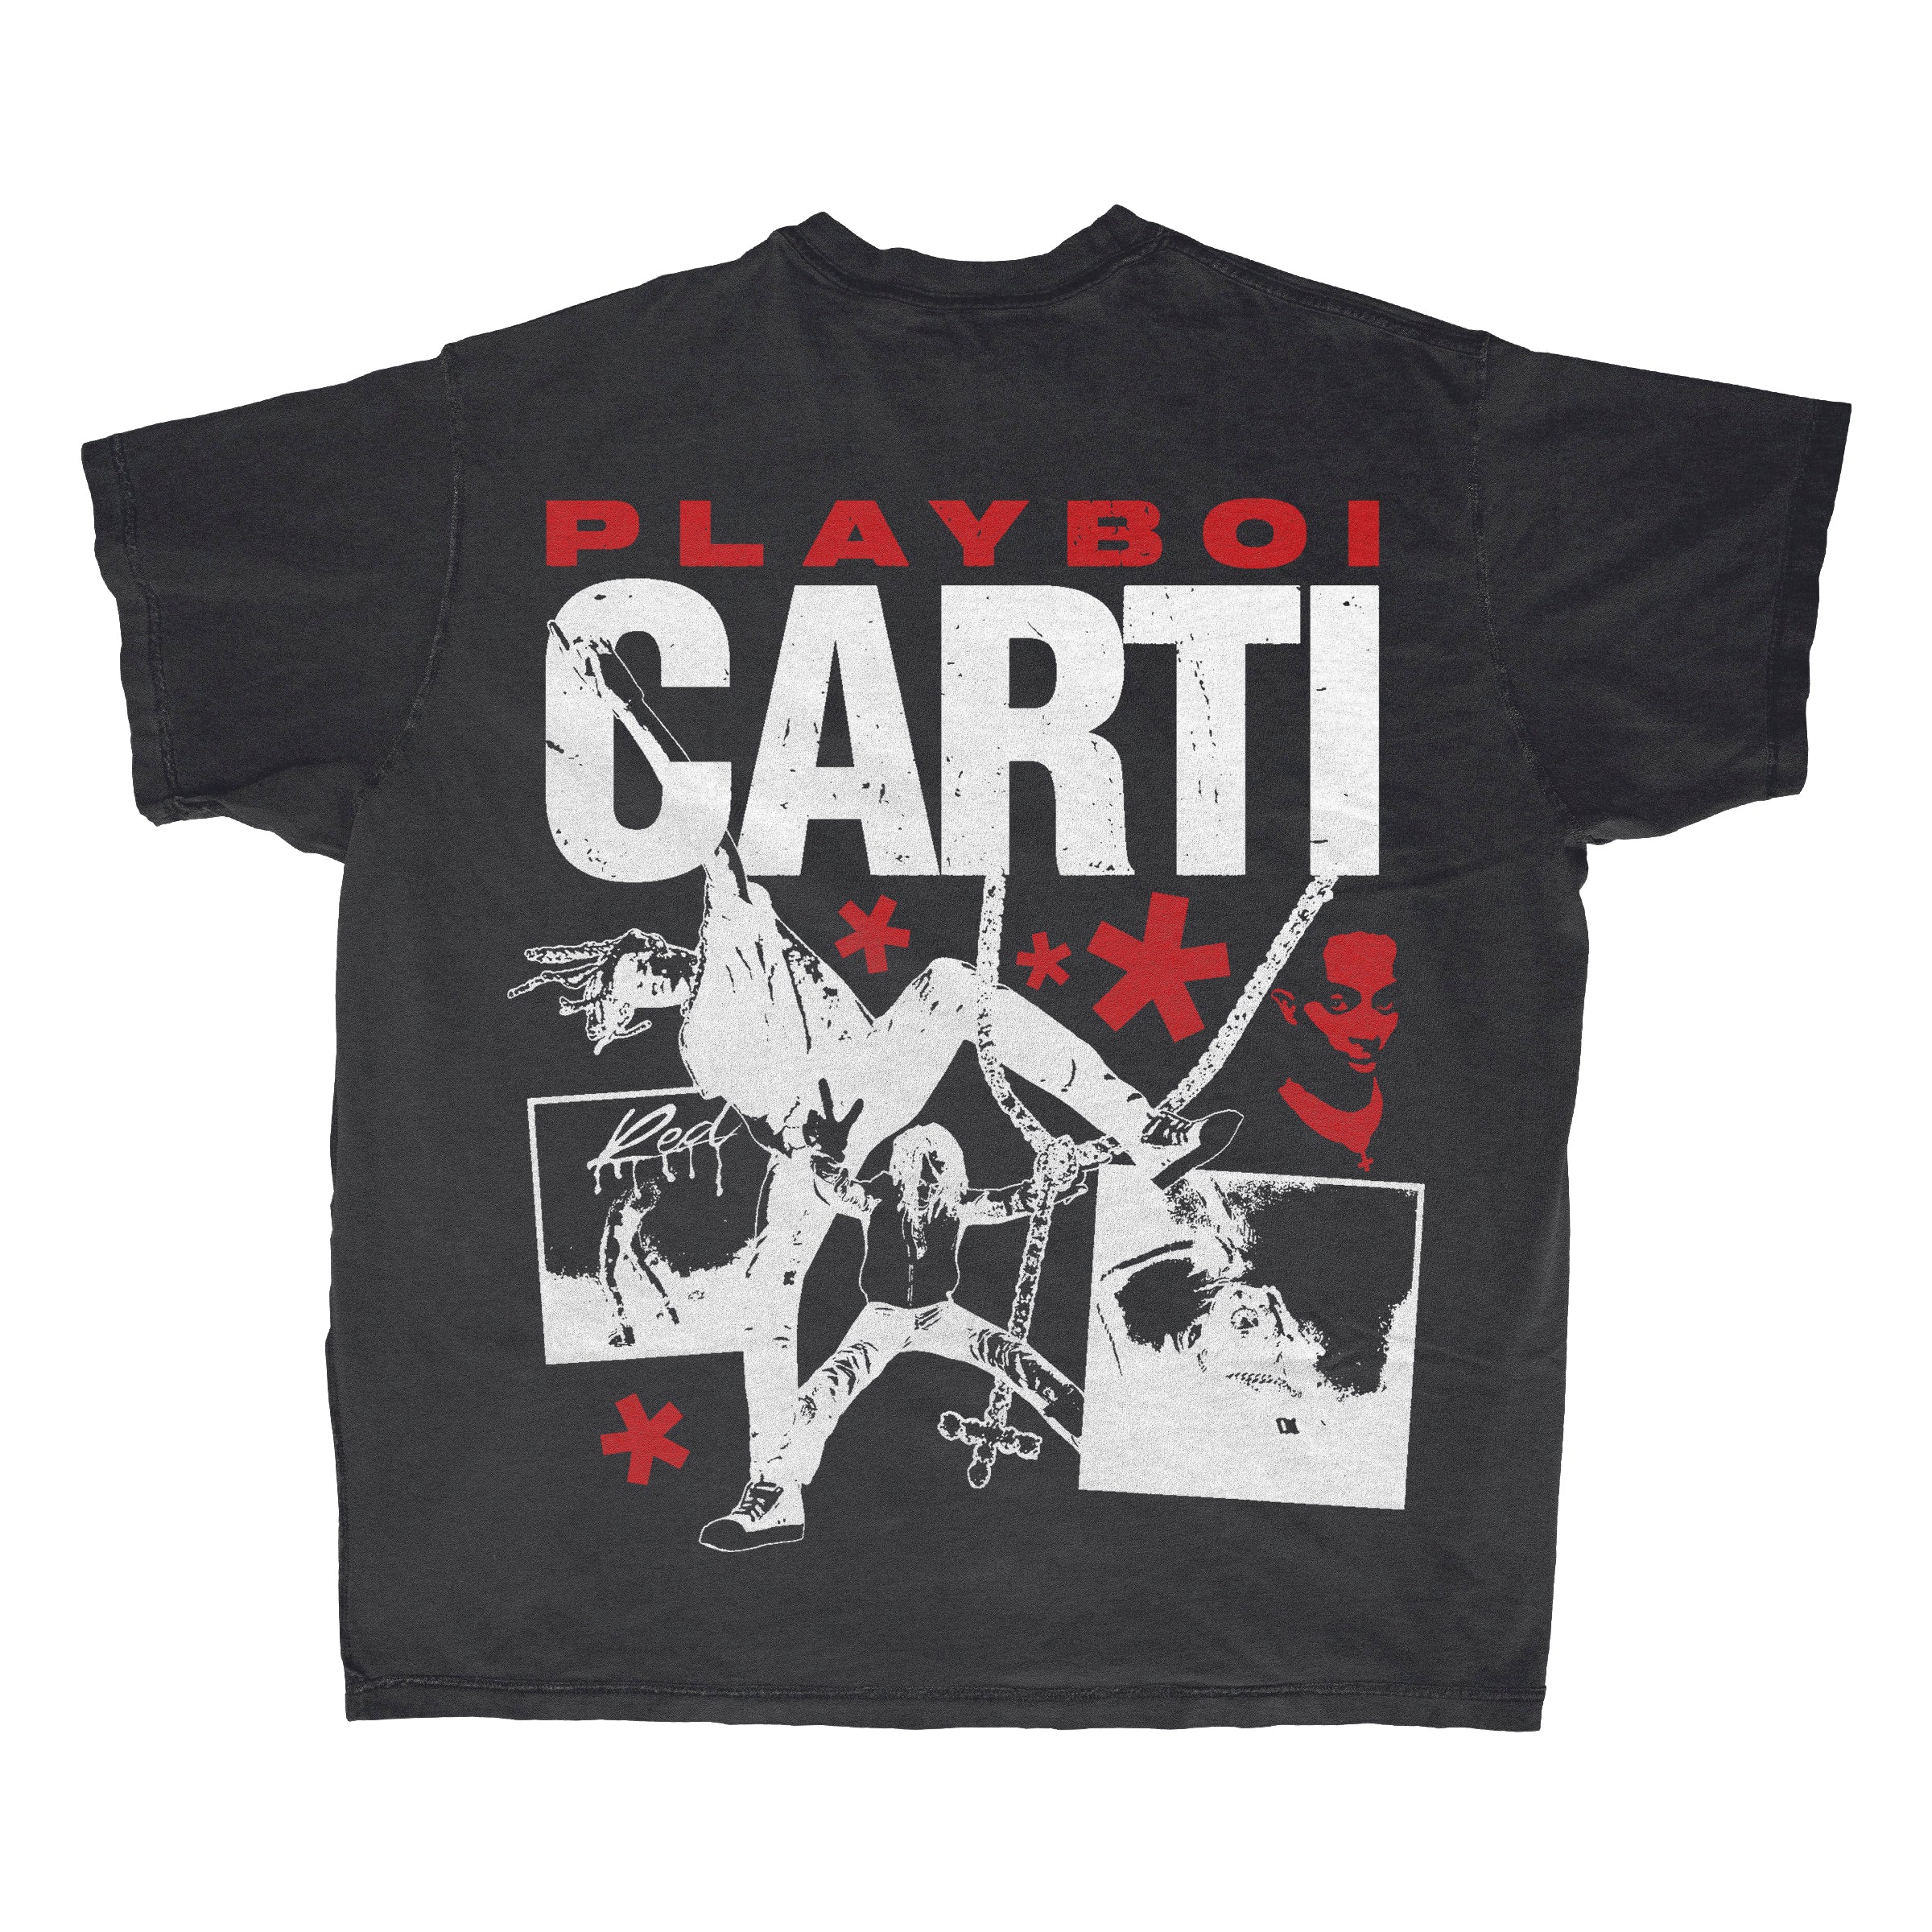 Playboi Carti T-Shirt / Double Printed T-Shirt - Retro Finest Tees